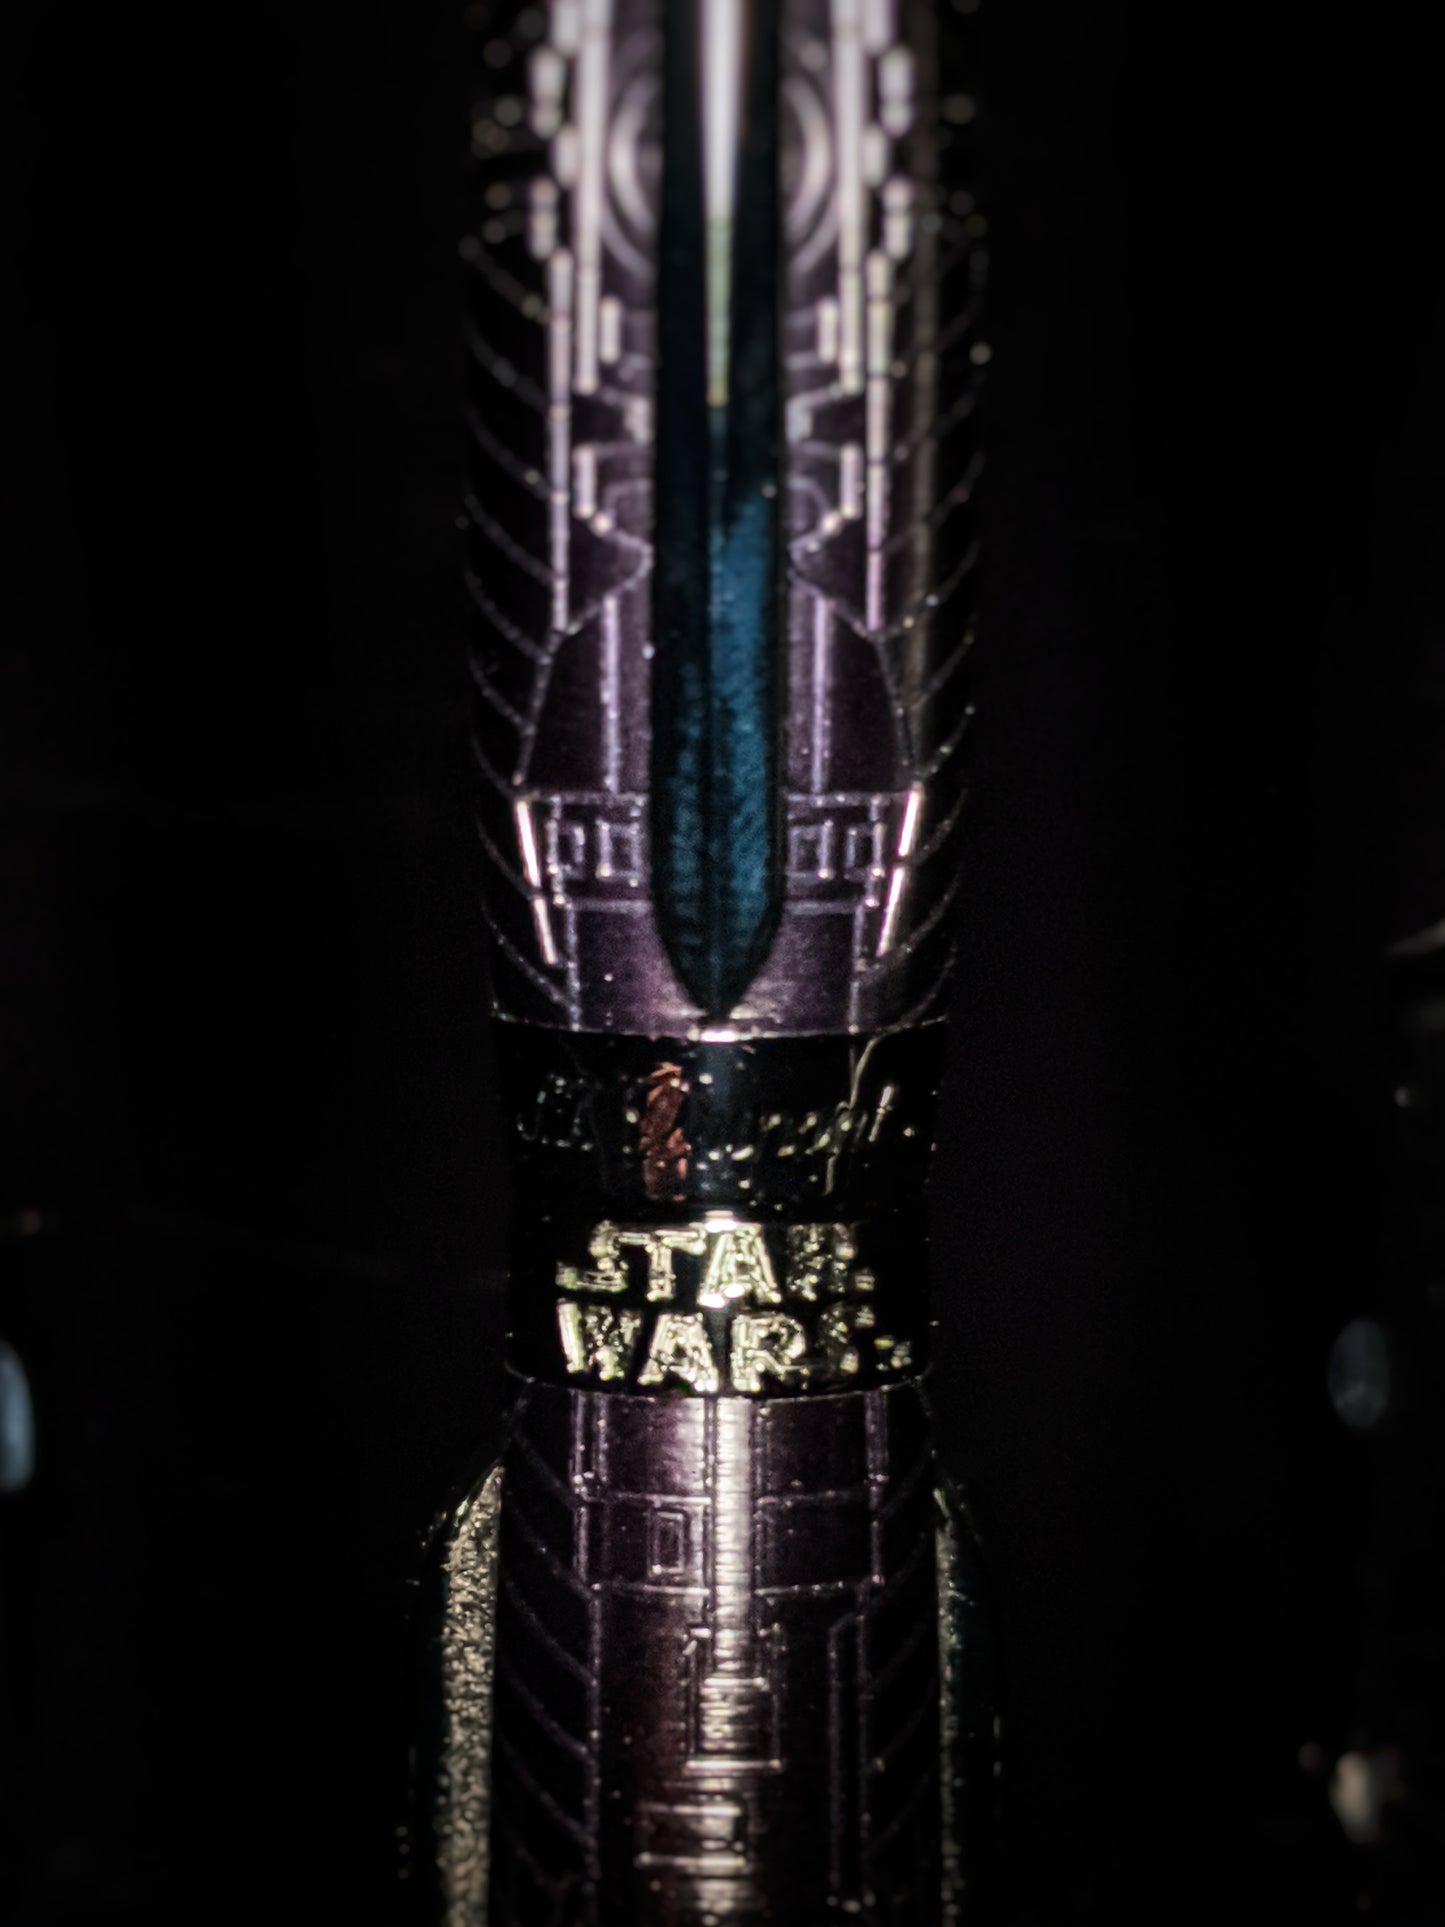 ST Dupont Star Wars Ltd Edition Fountain Pen